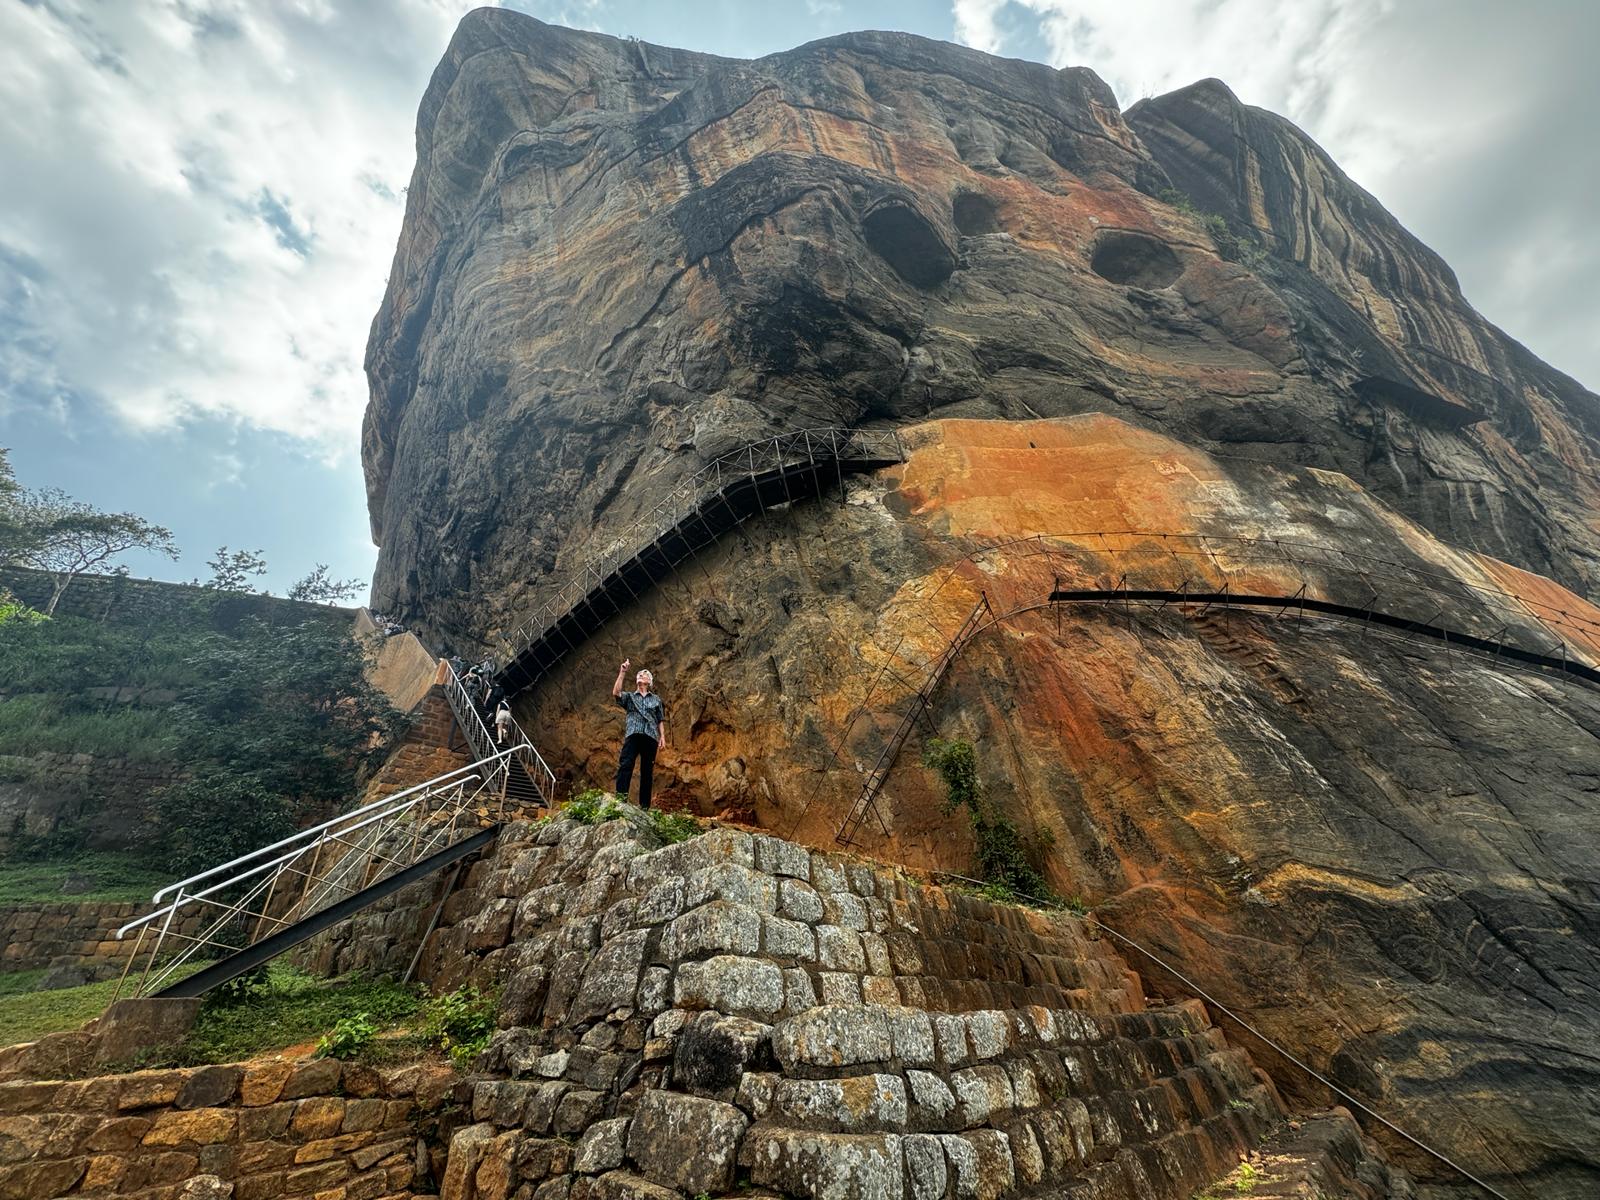 kym gregg tour: Srilanka tour sigiriya fortress